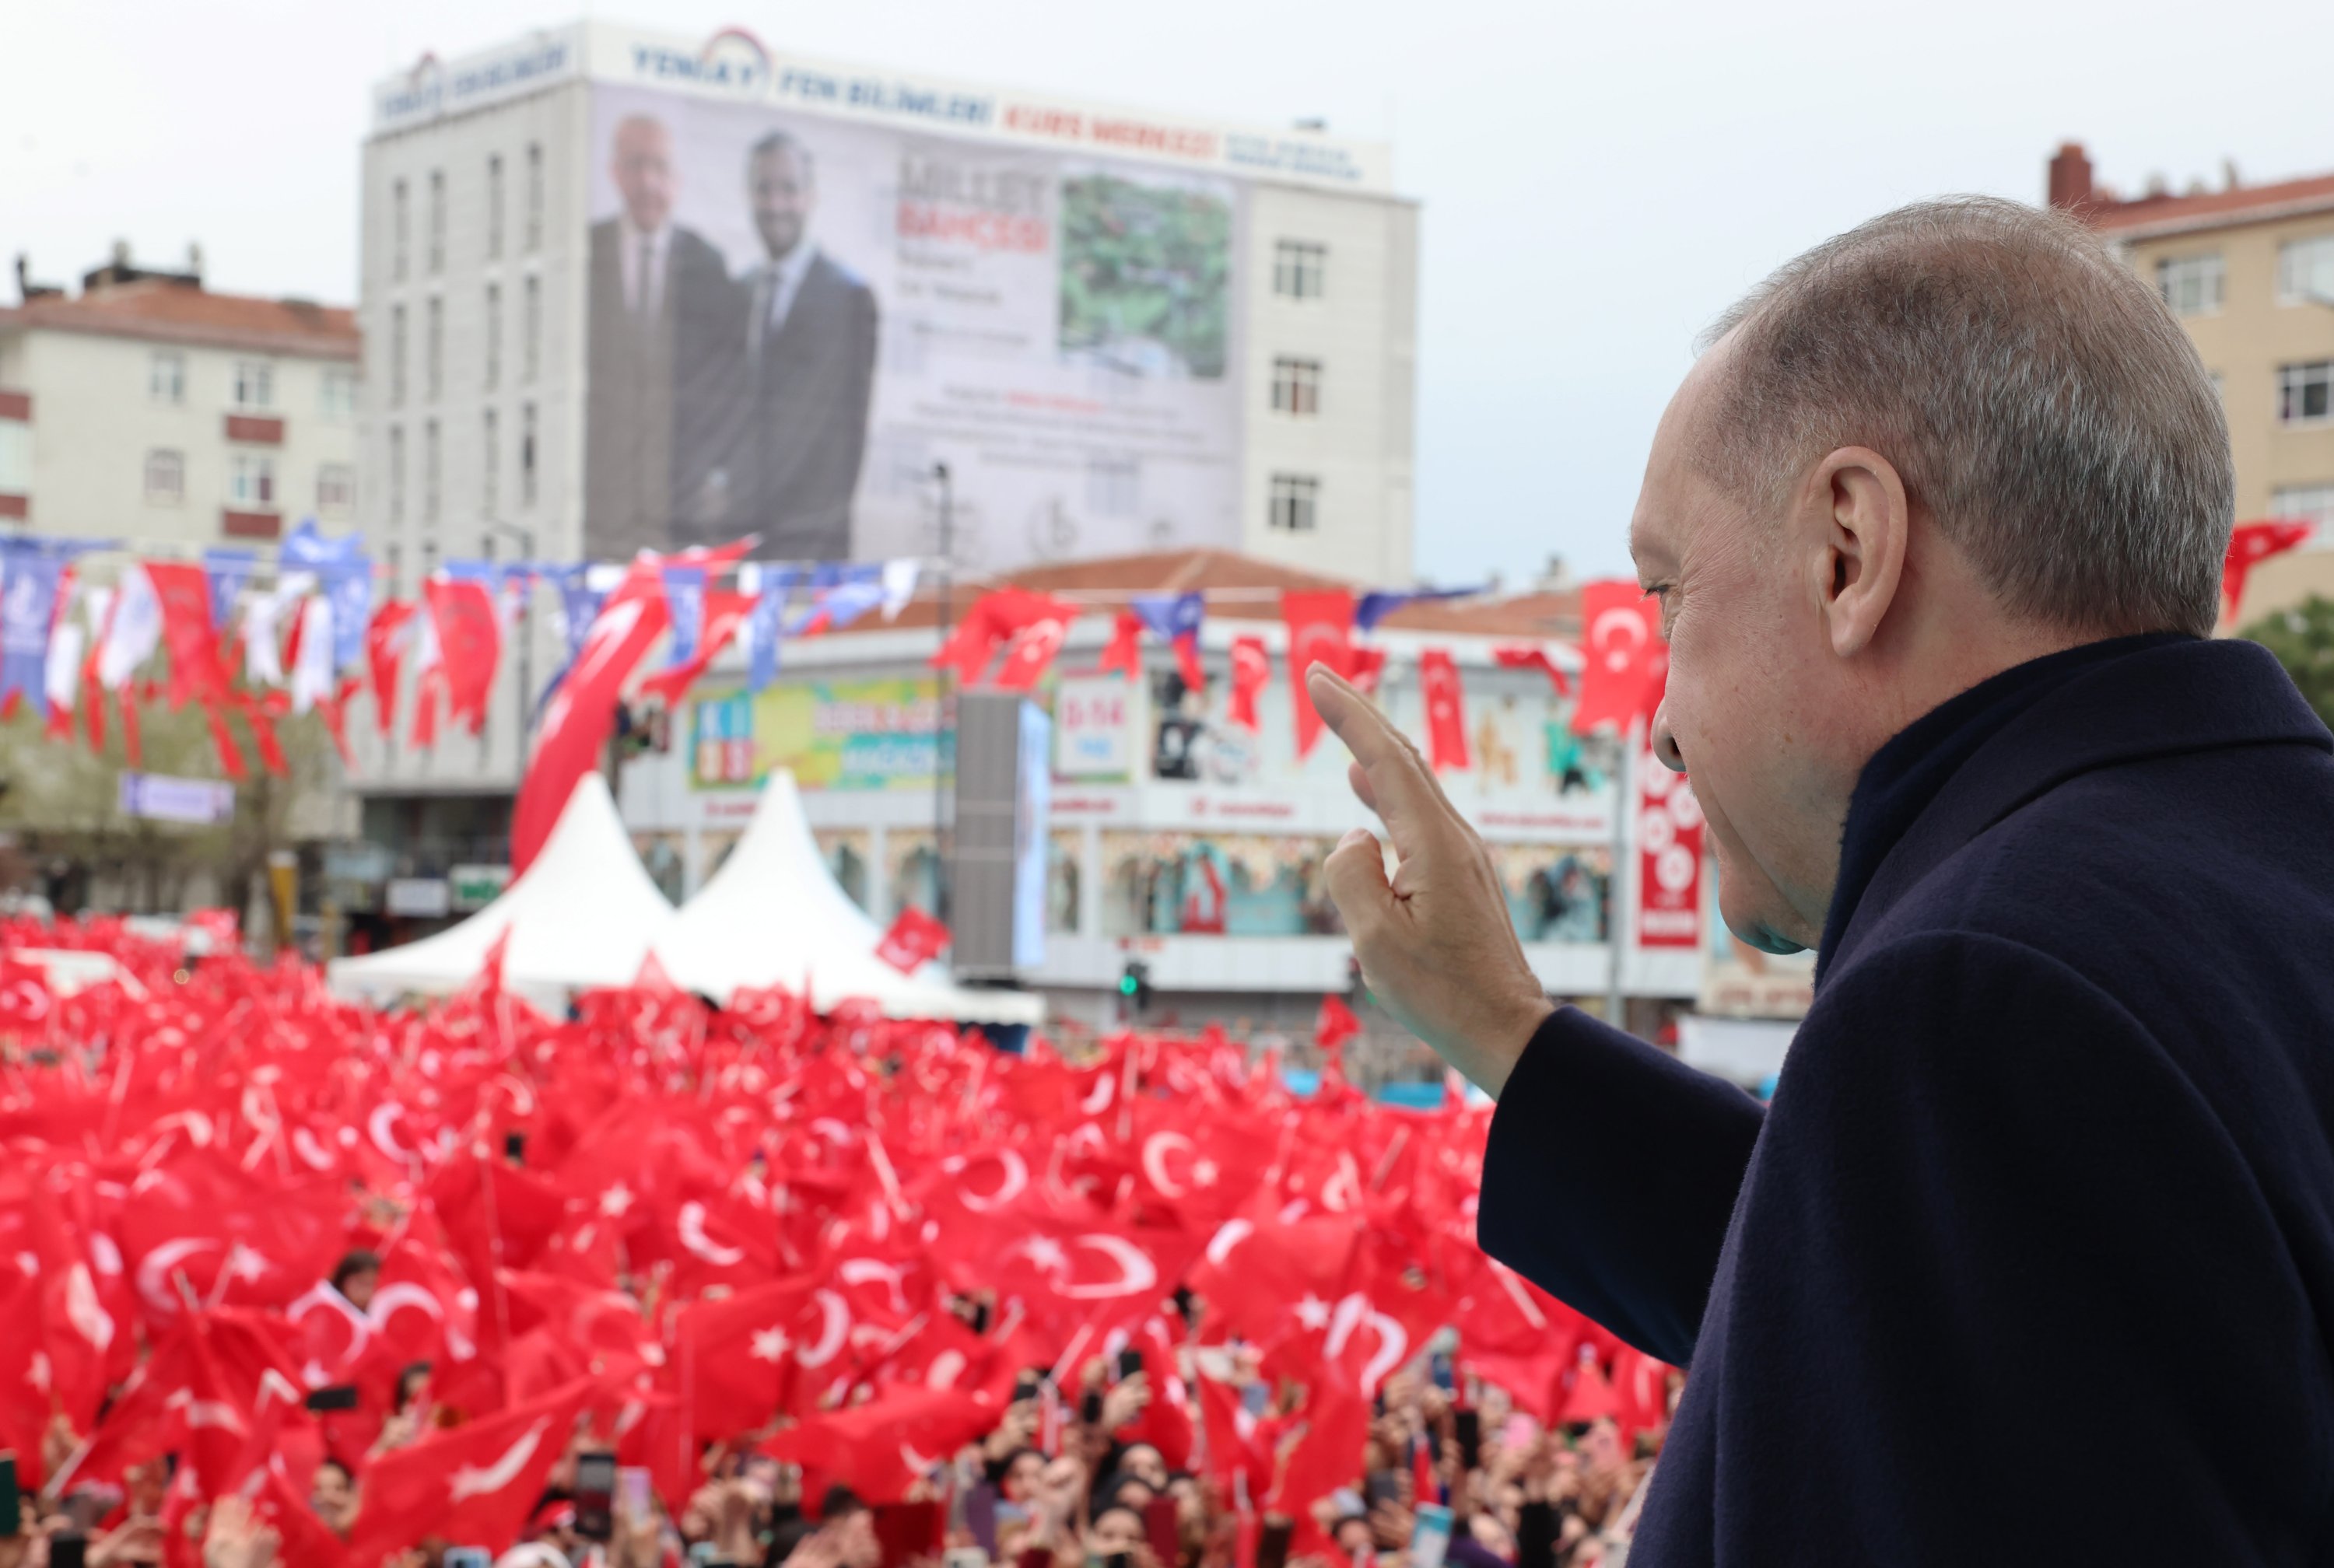 AK Party unveils election campaign eyeing ‘Century of Türkiye’ | Daily ...